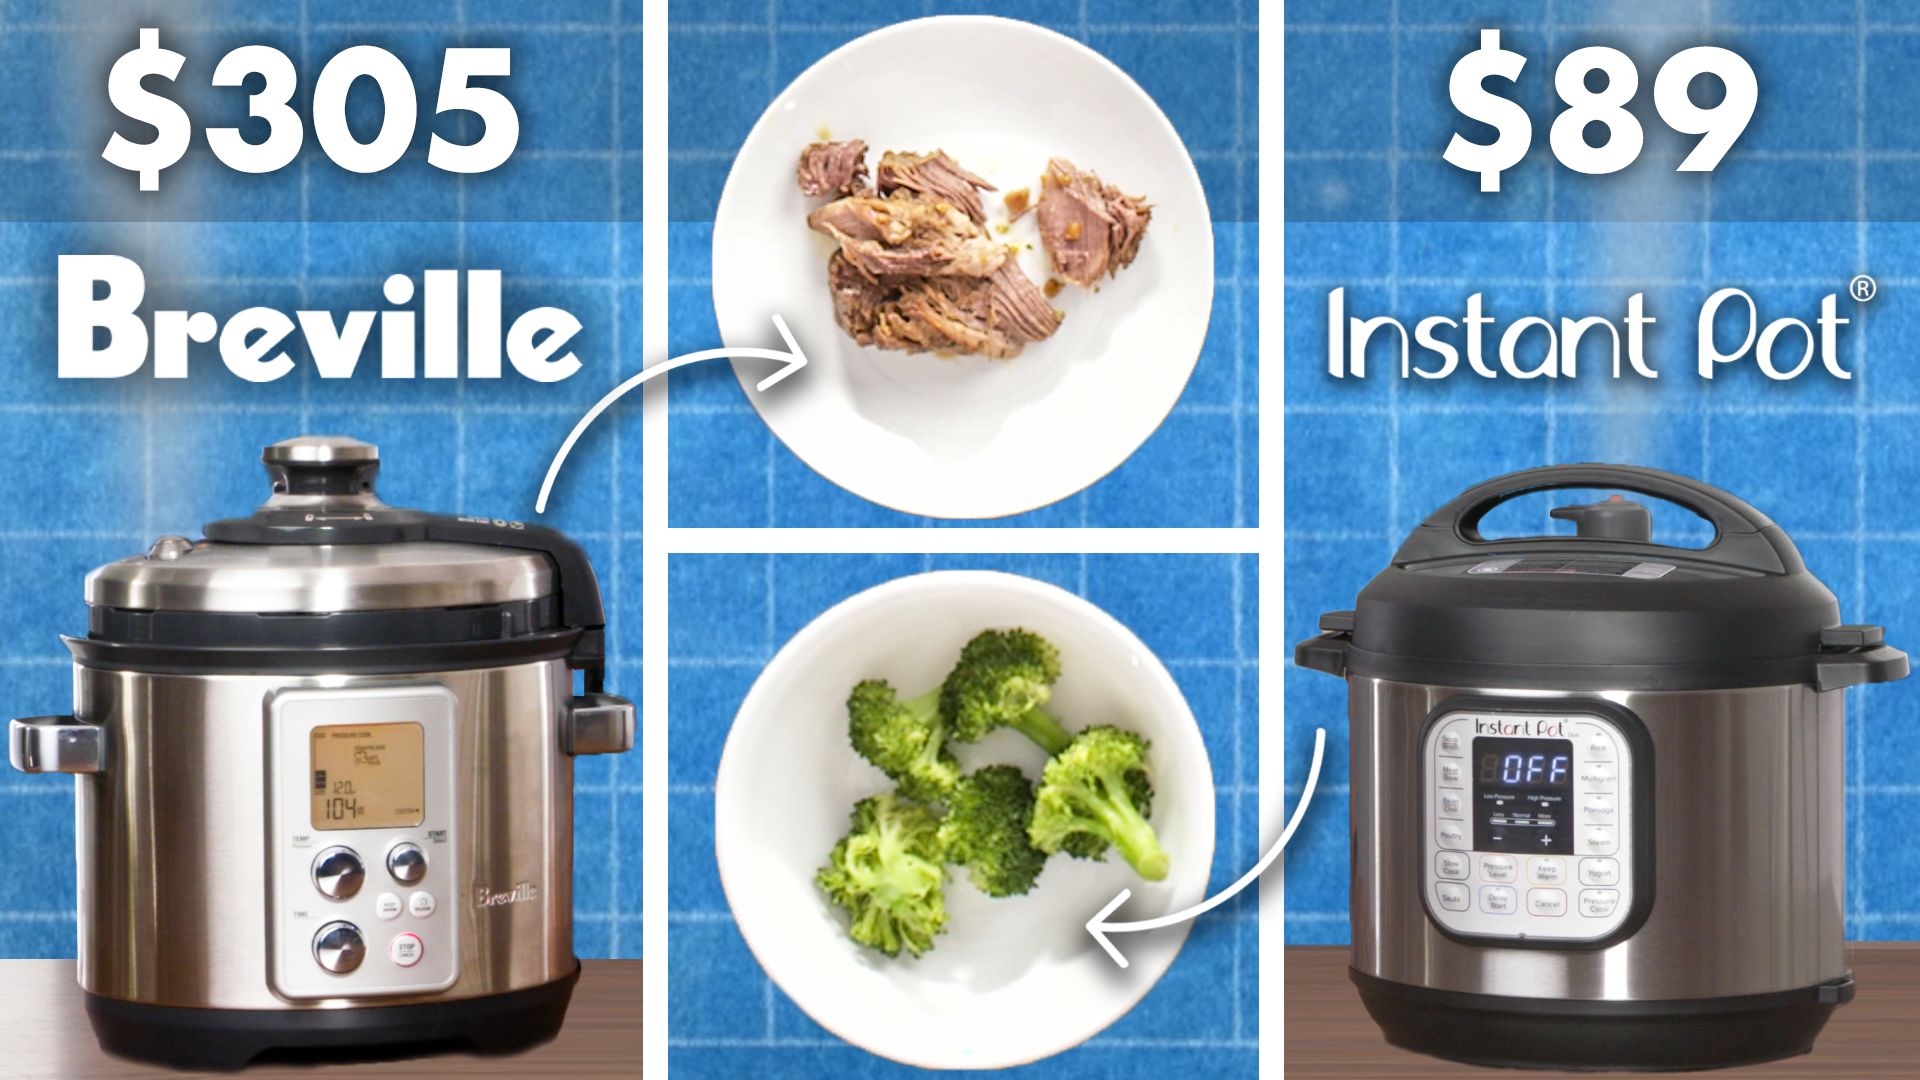 Watch $89 Instant Pot vs $305 Breville: Design Engineer Tests